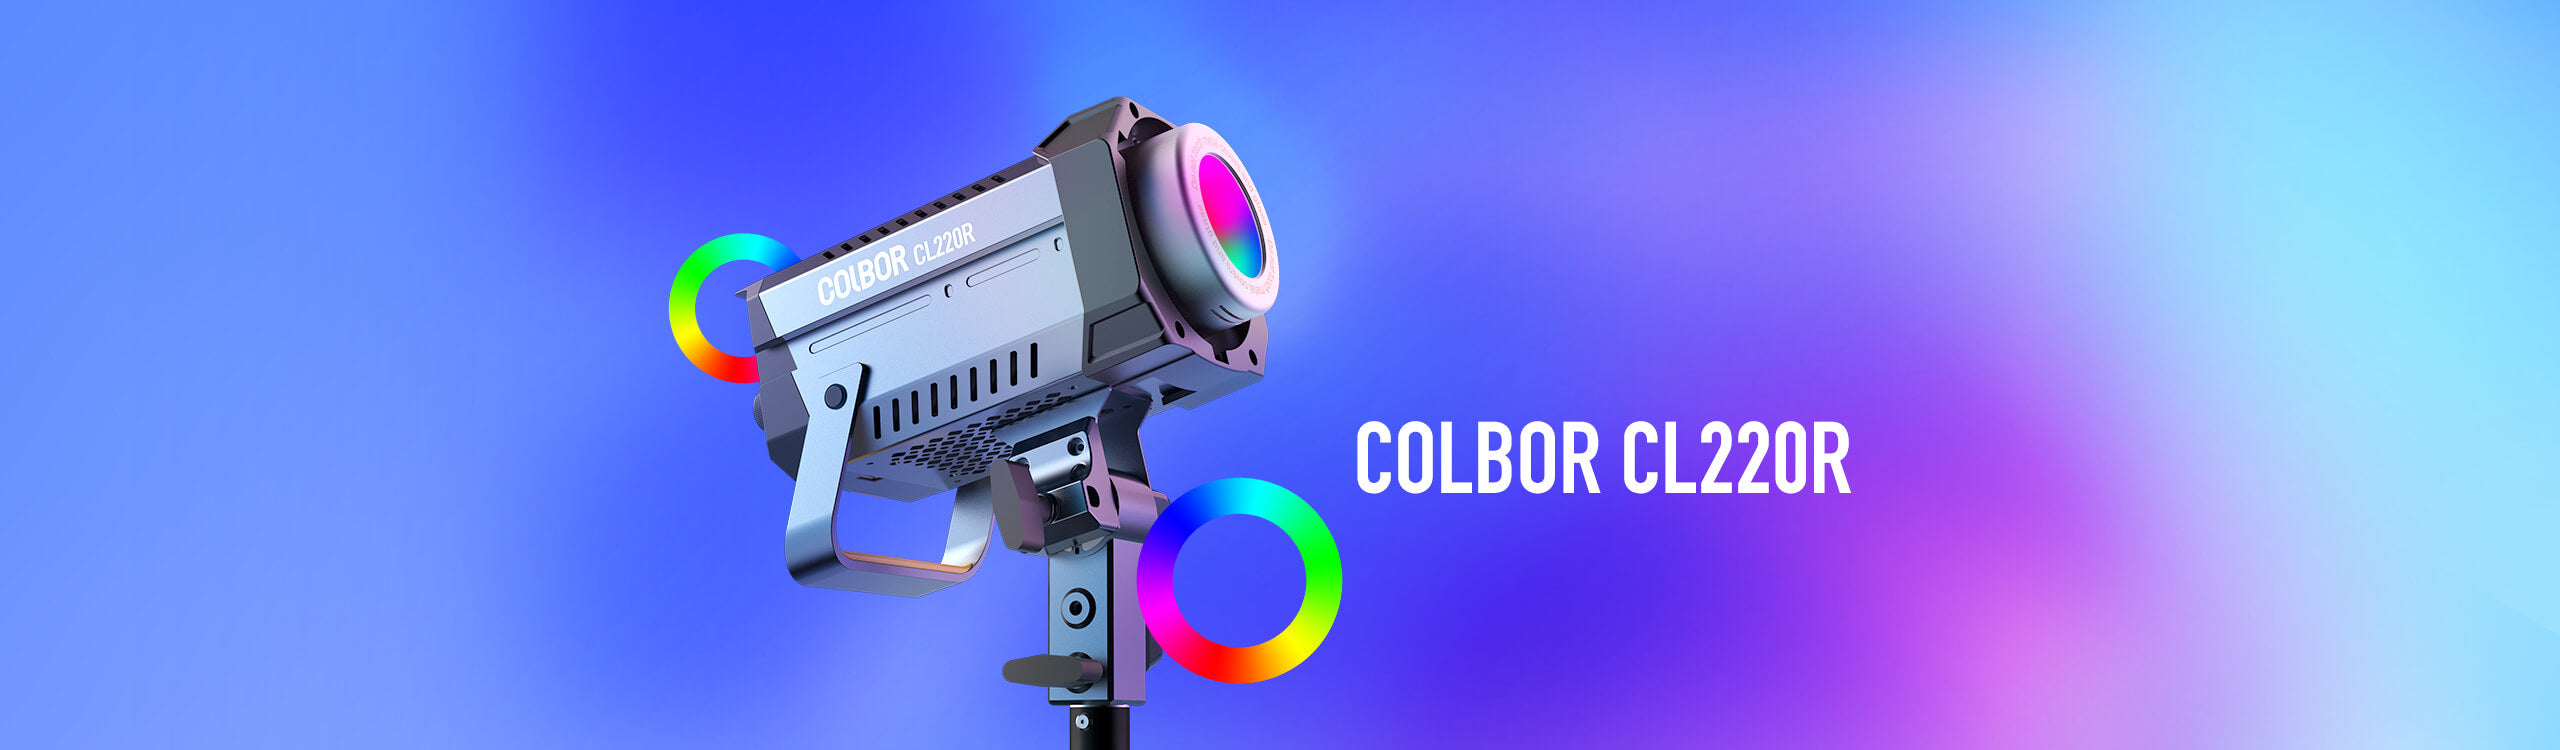 220W RGB Light for Studio COLBOR CL220R